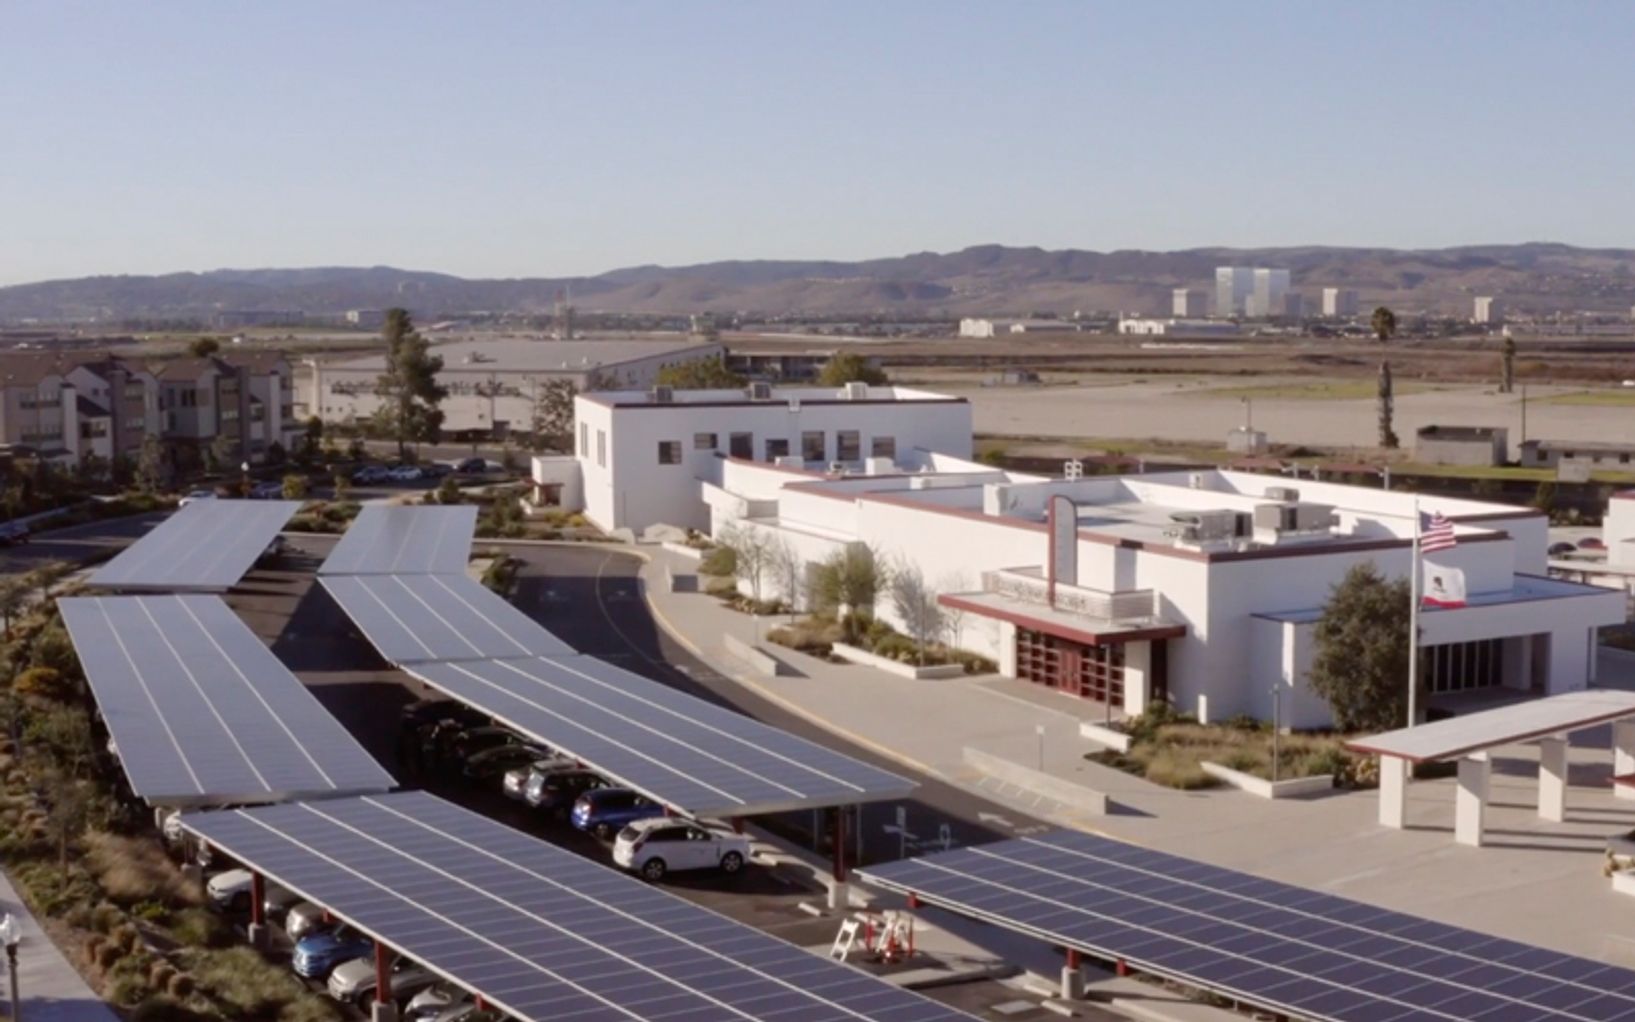 Carport mounted solar panels at a school parking lot - Onyx Renewables